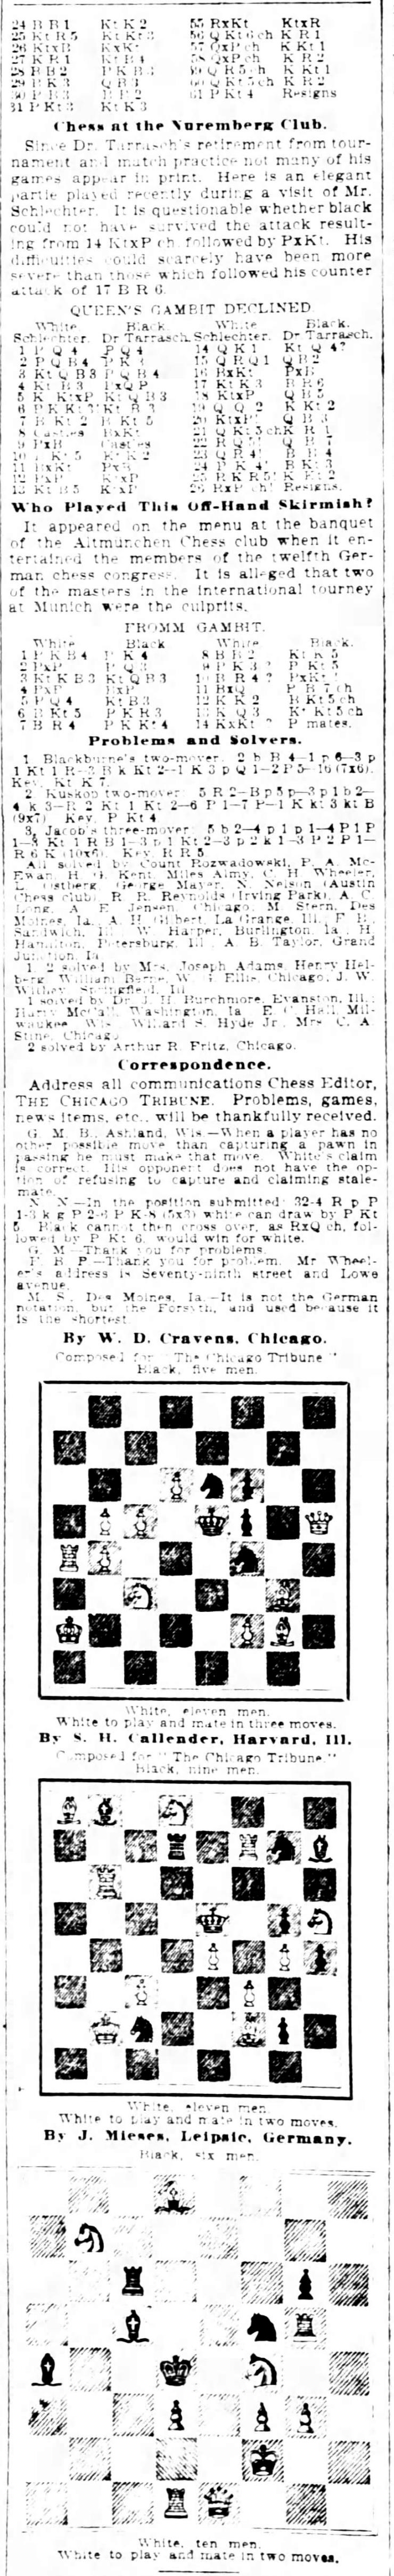 1900.10.28-02 Chicago Tribune.jpg